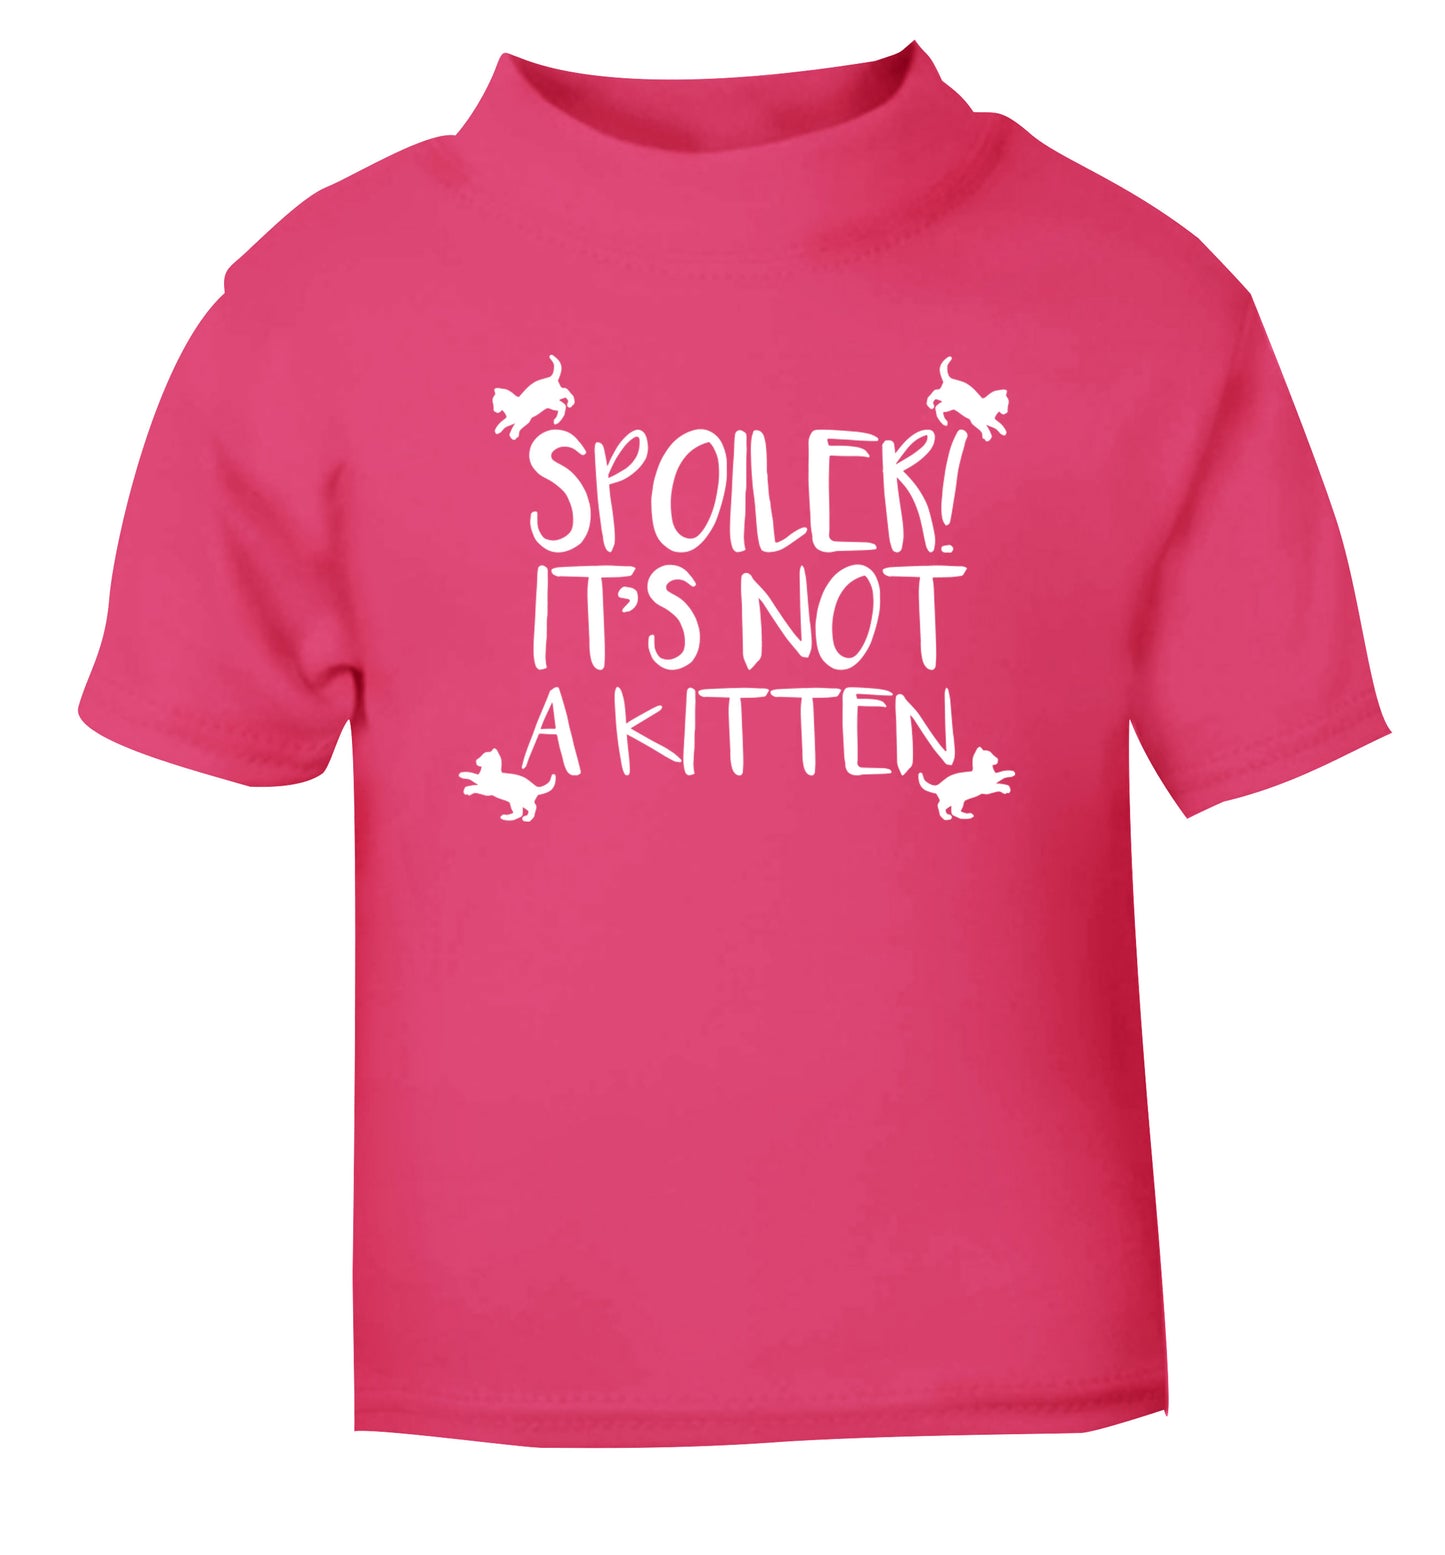 Spoiler it's not a kitten pink Baby Toddler Tshirt 2 Years